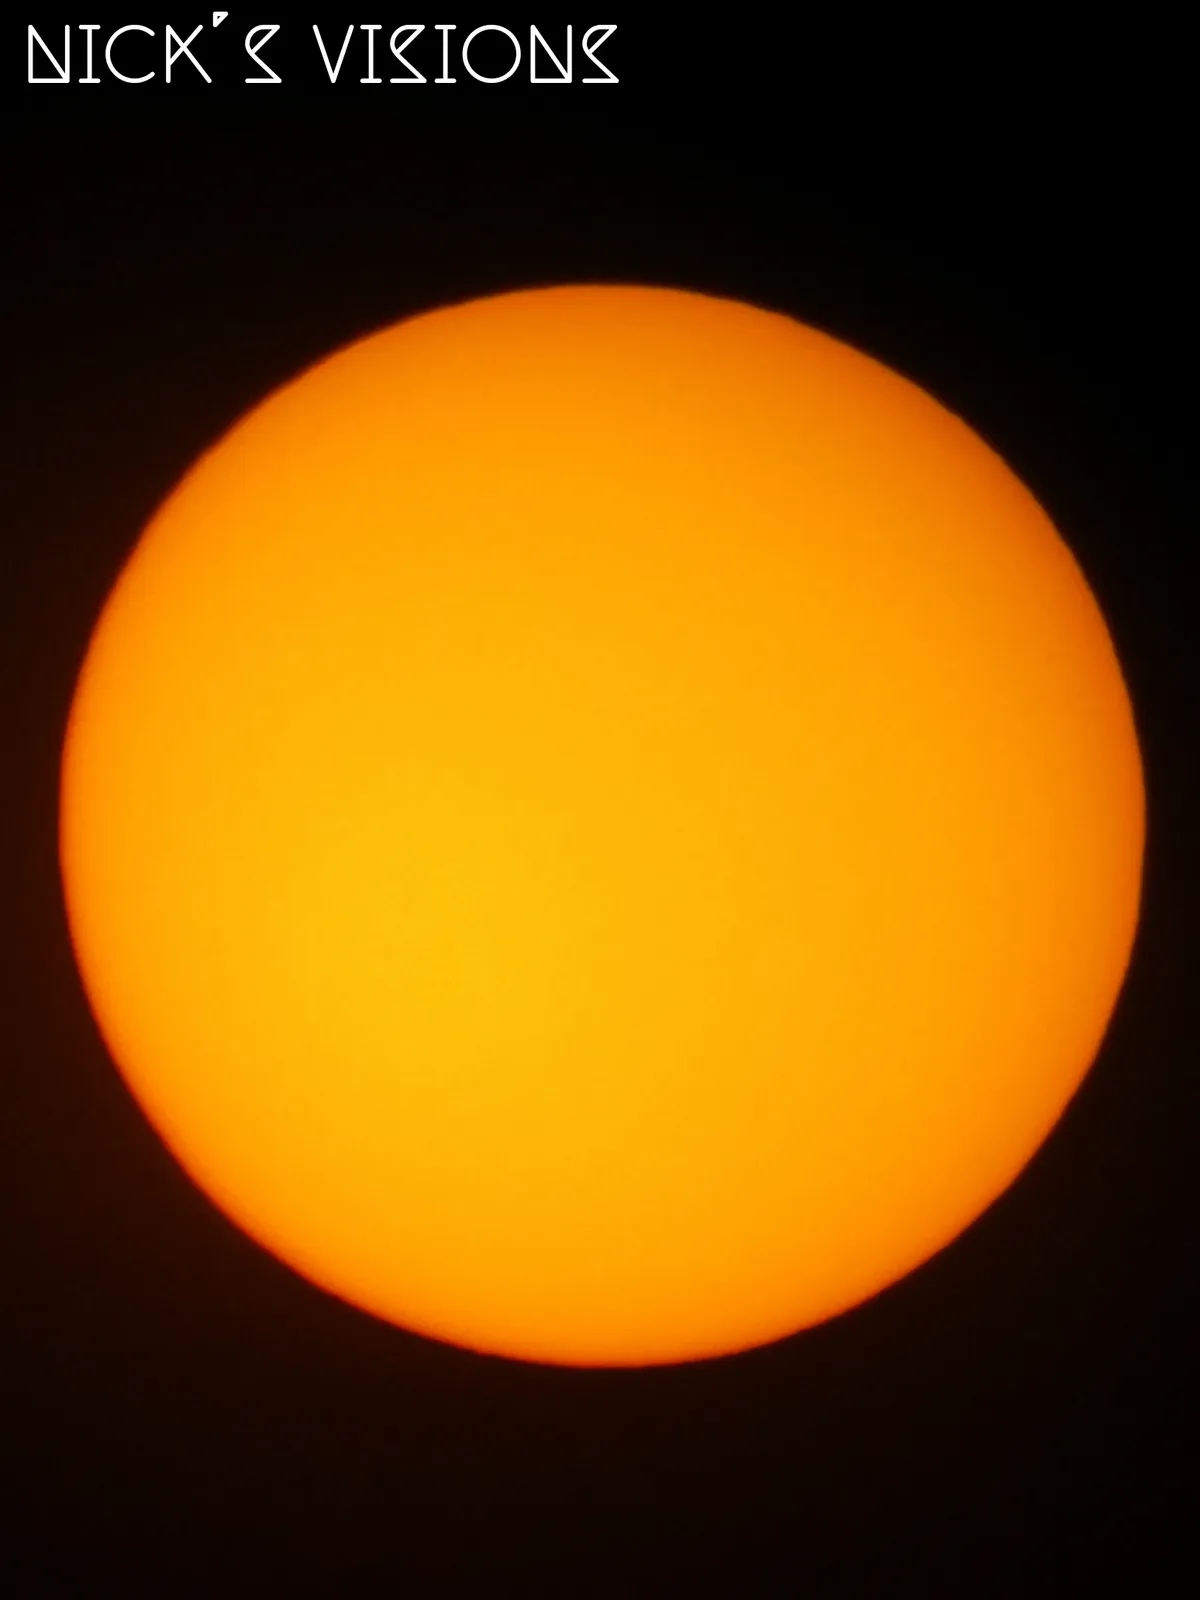 Our Sun by Nick, Long Island, NY, USA. Equipment: Celestron C70, Note 3, Thousand Oaks Optical